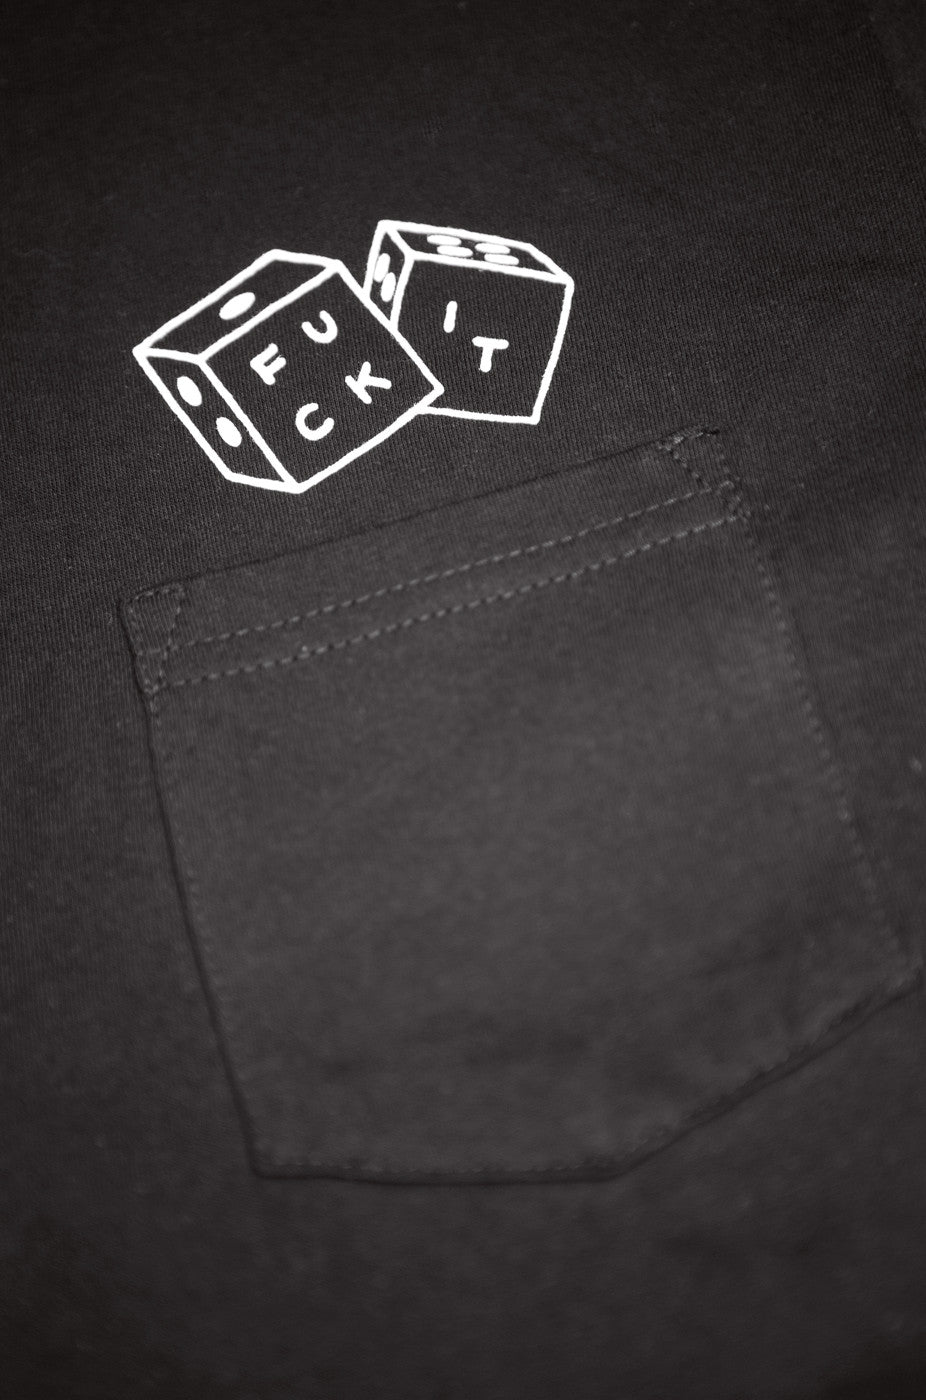 Fuck It Shirt - Dice Unisex Pocket T-shirt